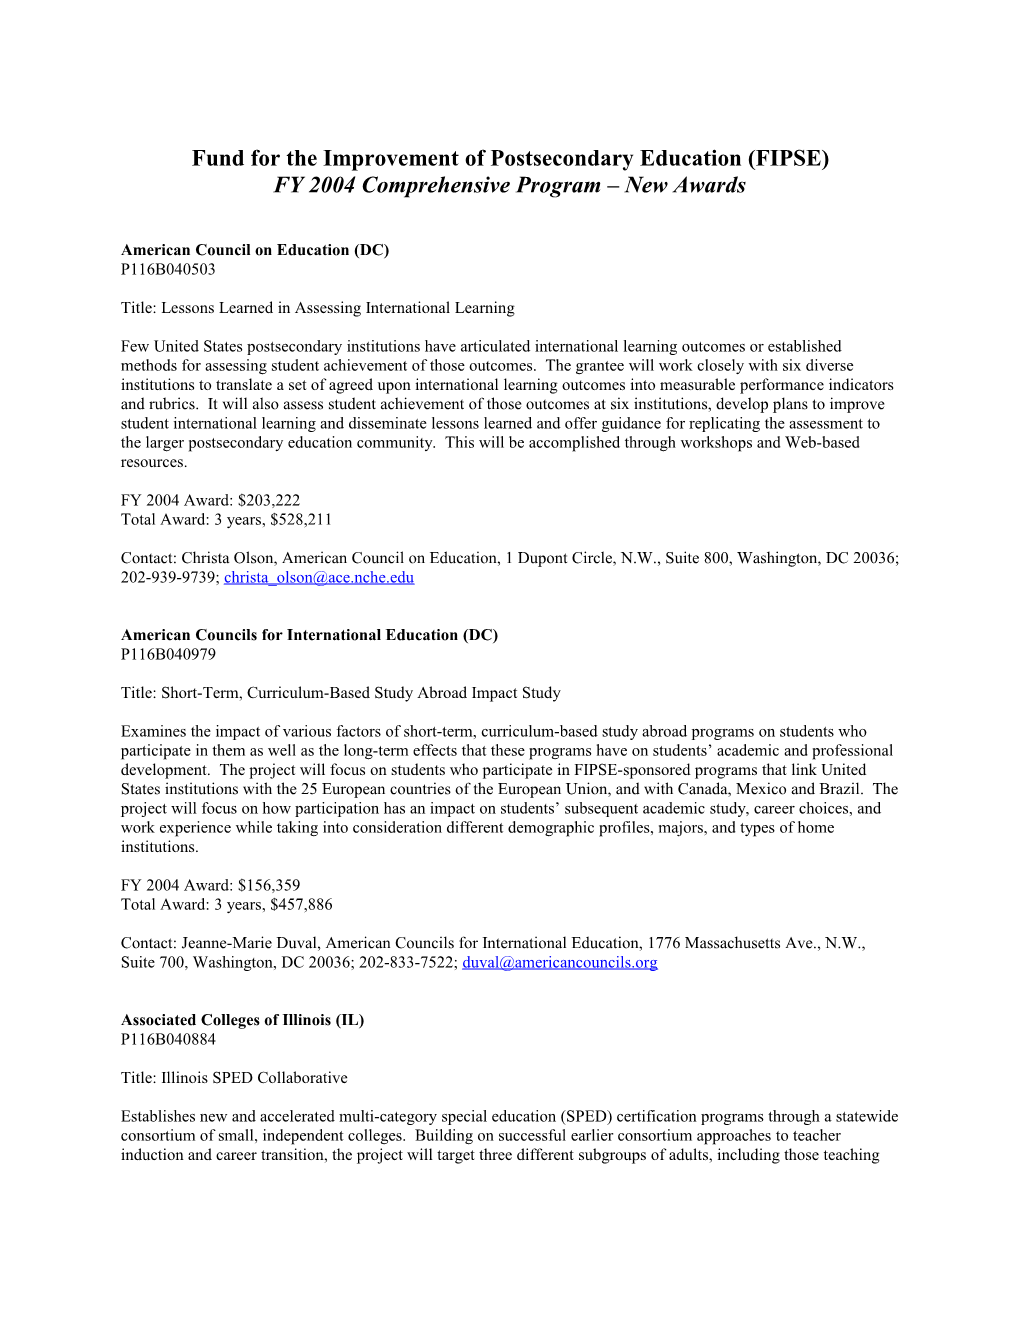 FIPSE Comprehensive Program 2004 New Awards